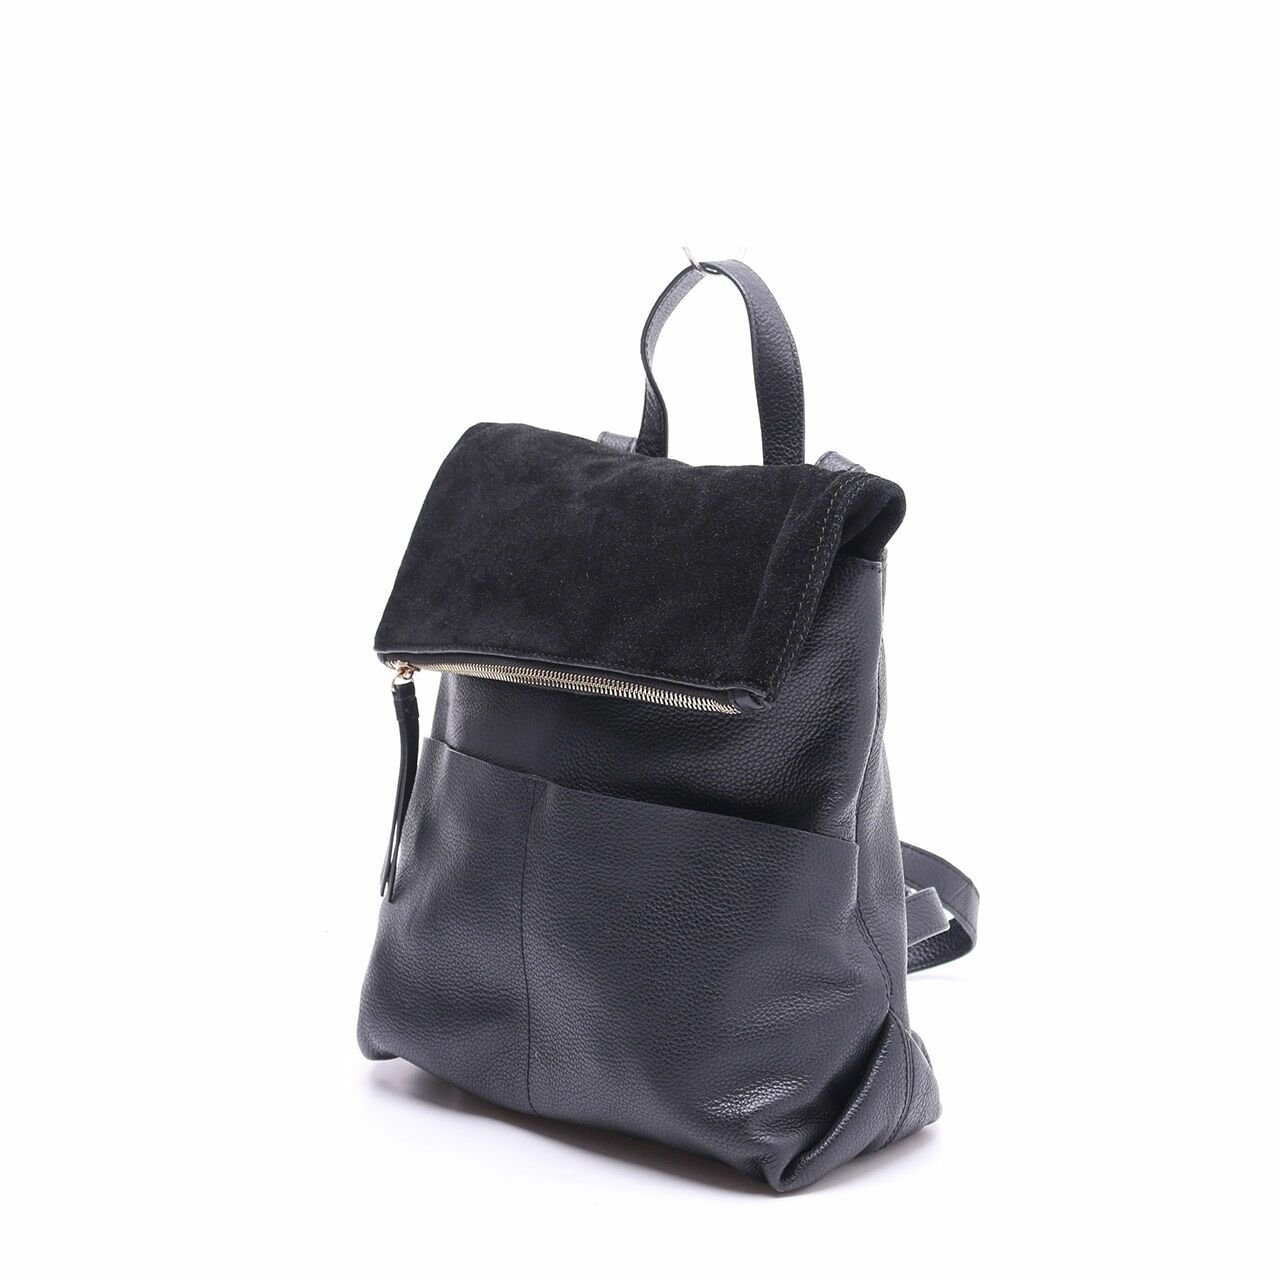 Accessorize Black Backpack